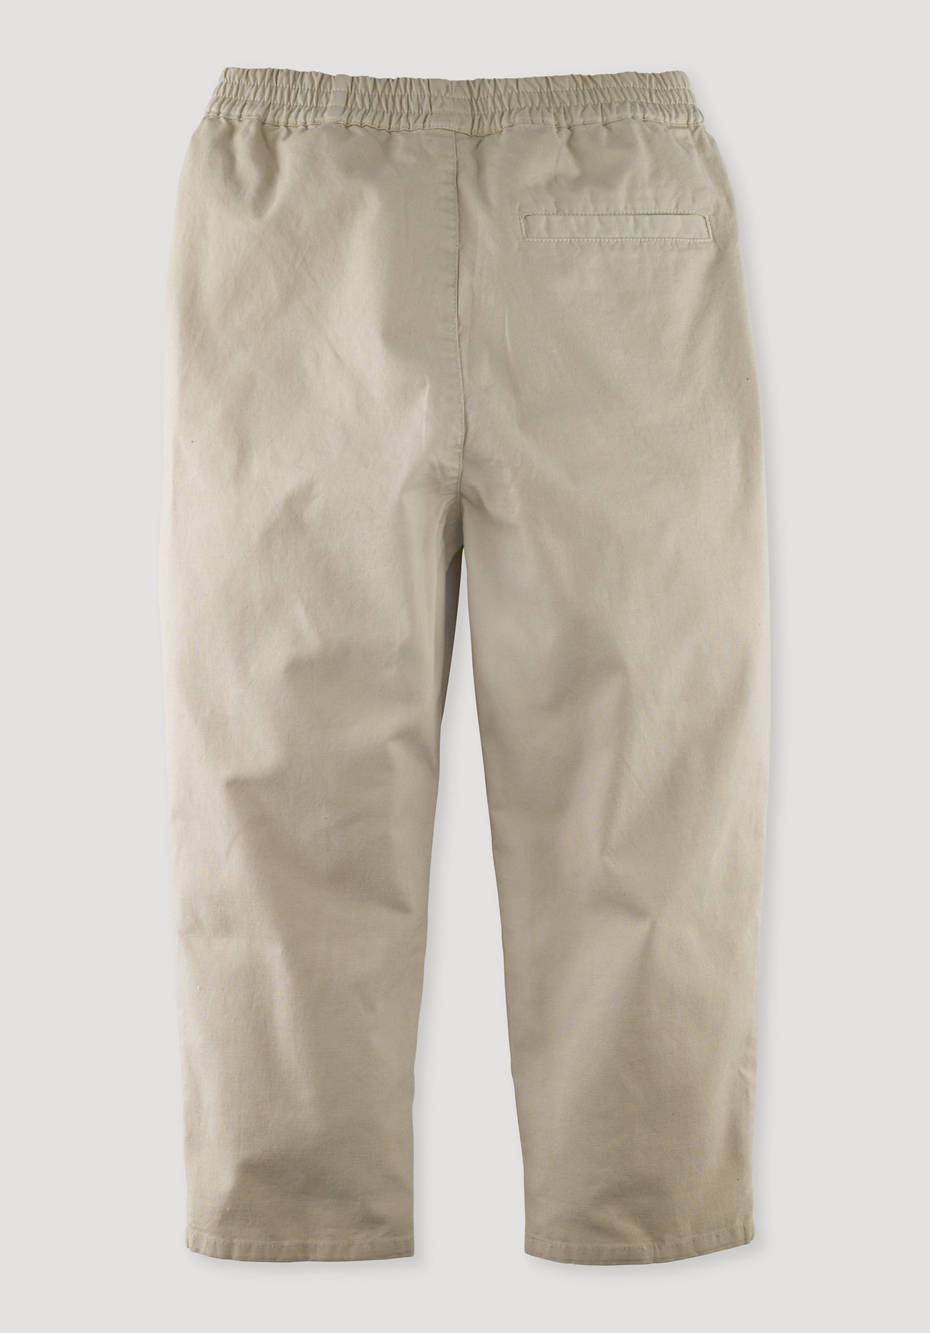 Pants made of organic cotton with hemp